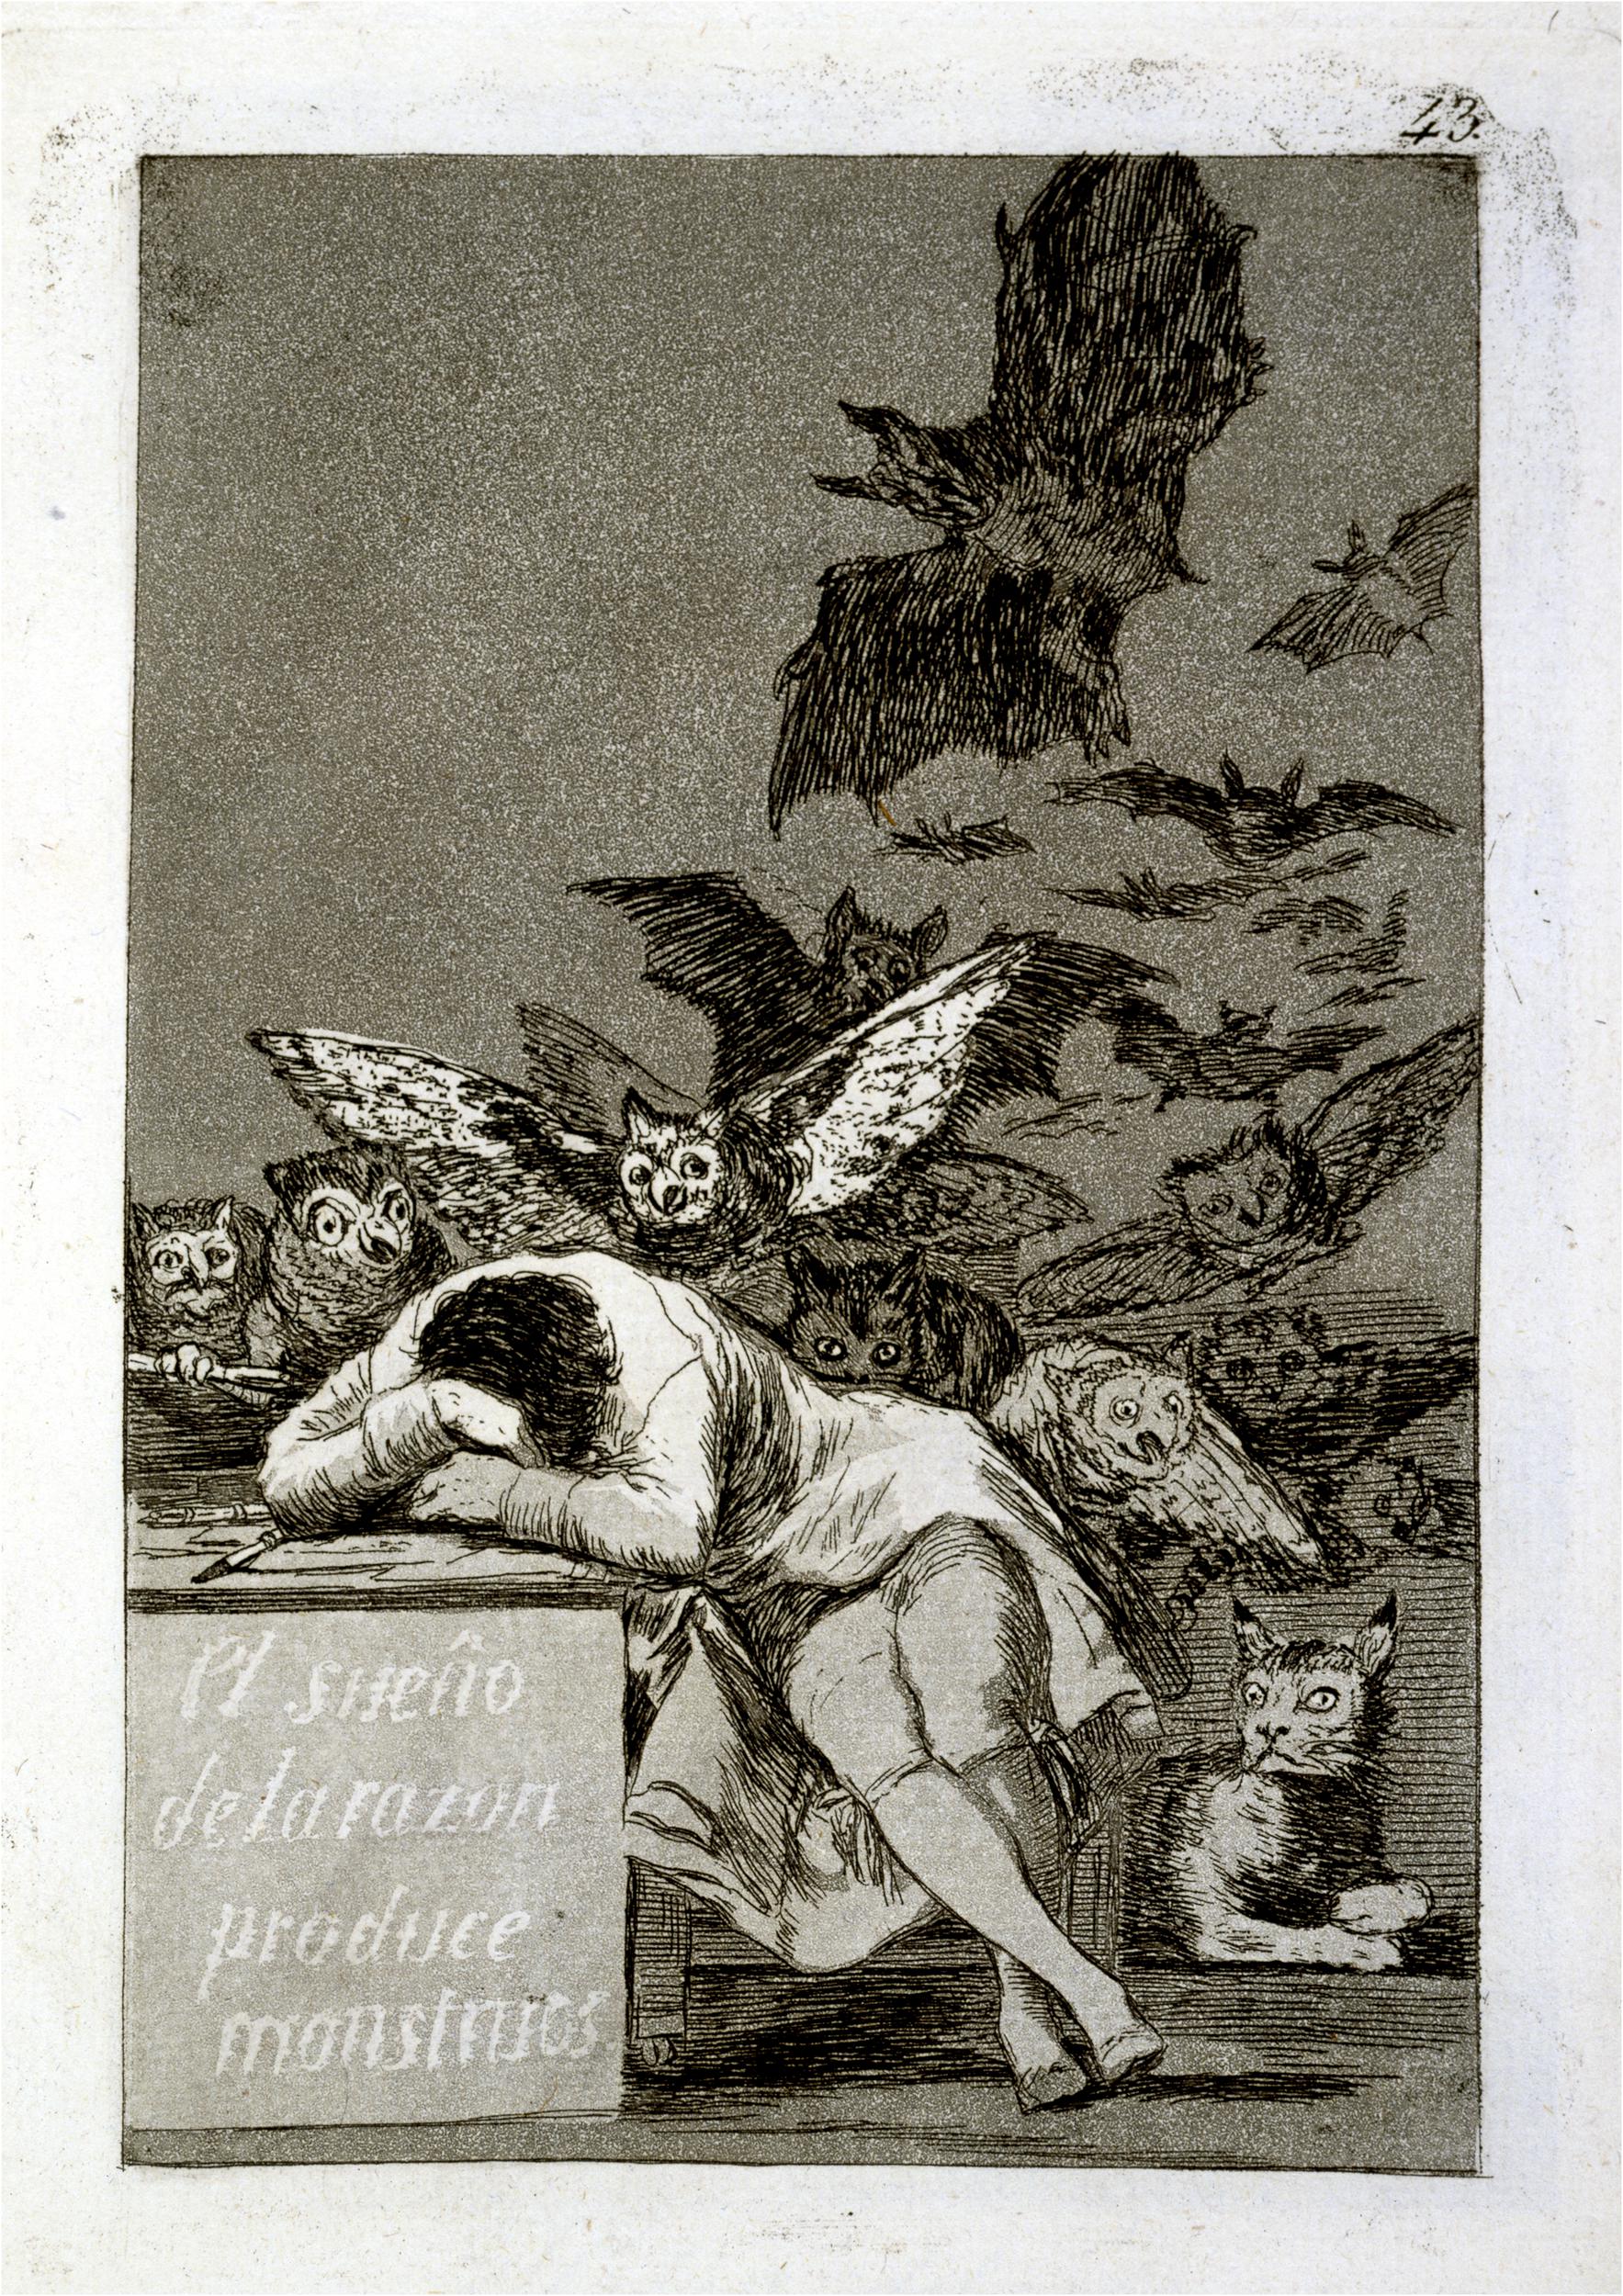 Francisco de Goya, Los Caprichos: The Sleep of Reason Produces Monsters, 1799, etching and aquatint, 21.2 x 15.0 cm (British Museum, London)